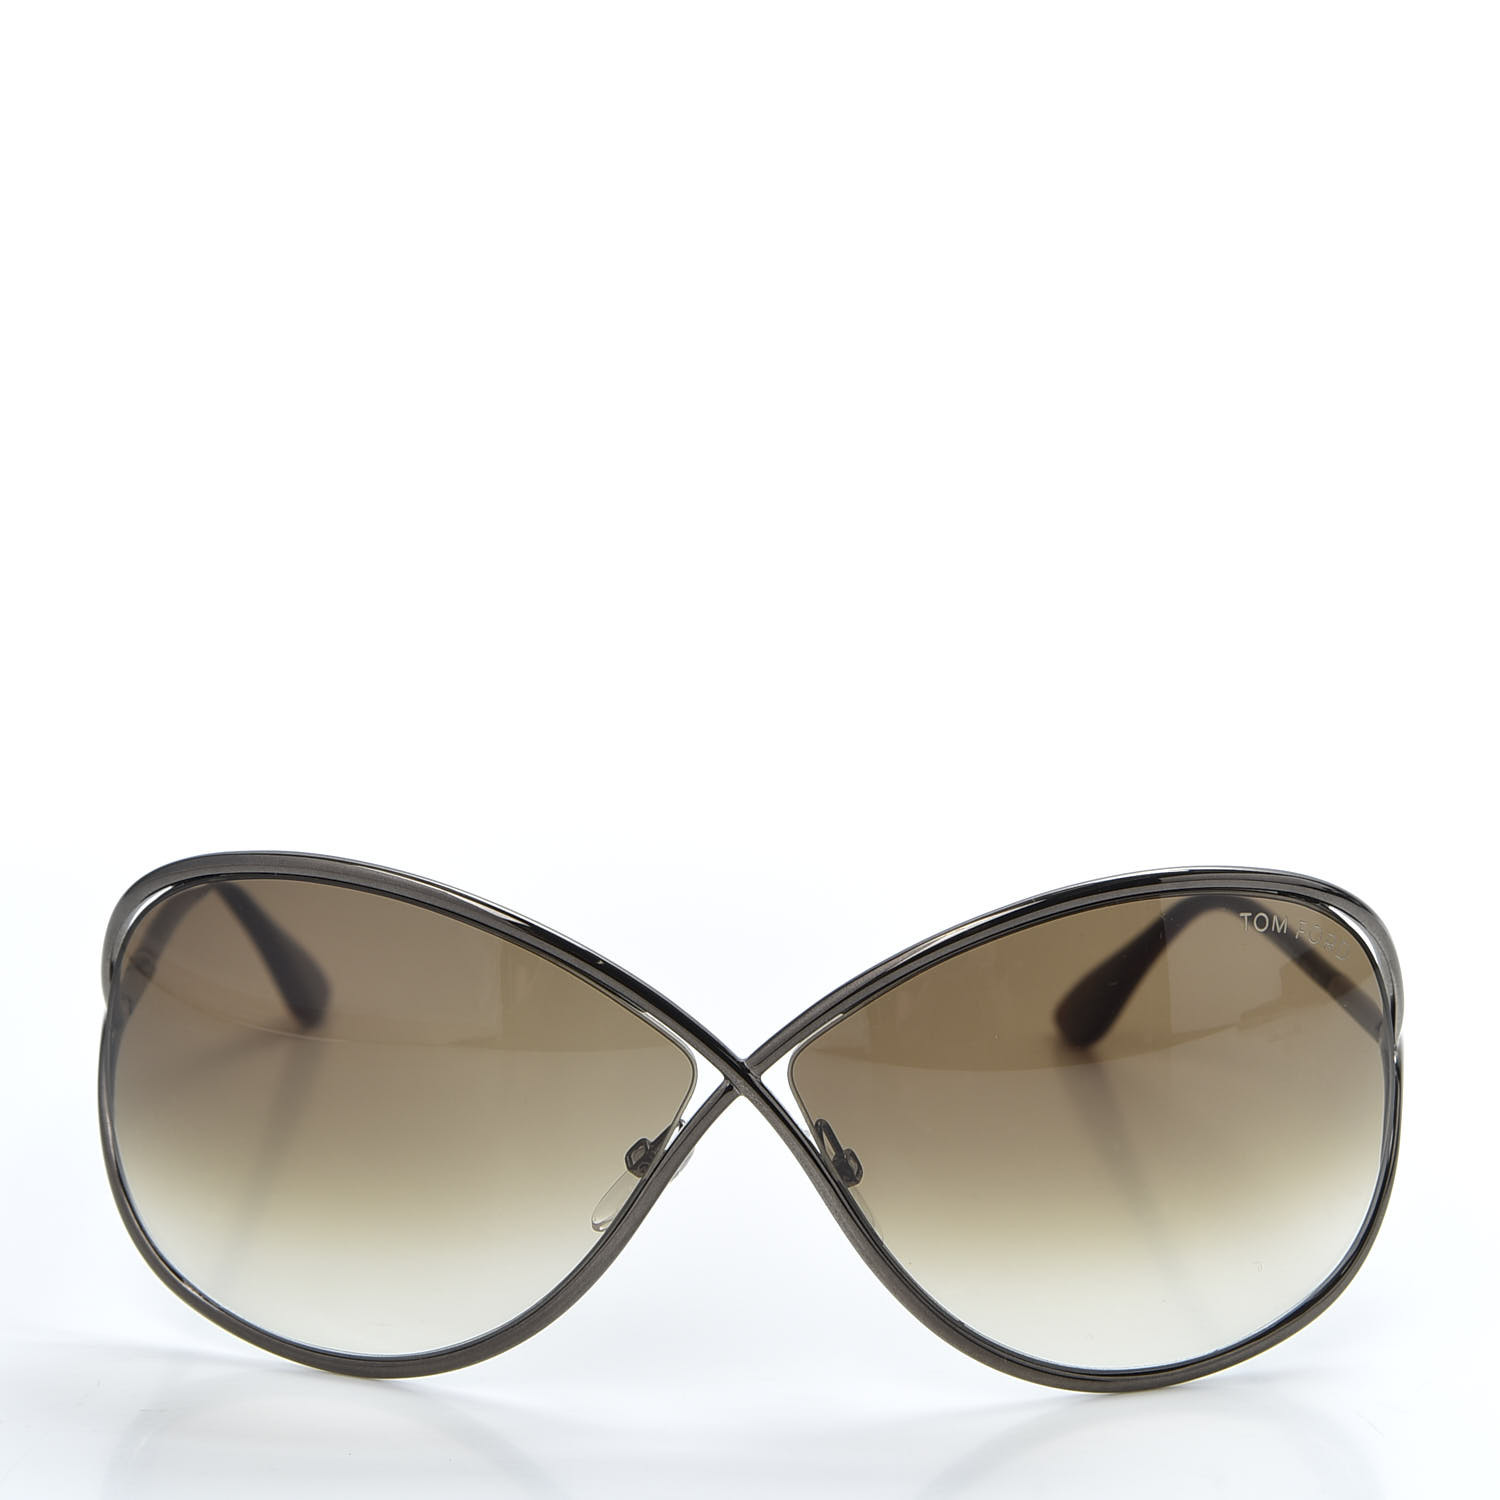 TOM FORD Miranda Crossover Sunglasses TF130 Shiny Bronze 589688